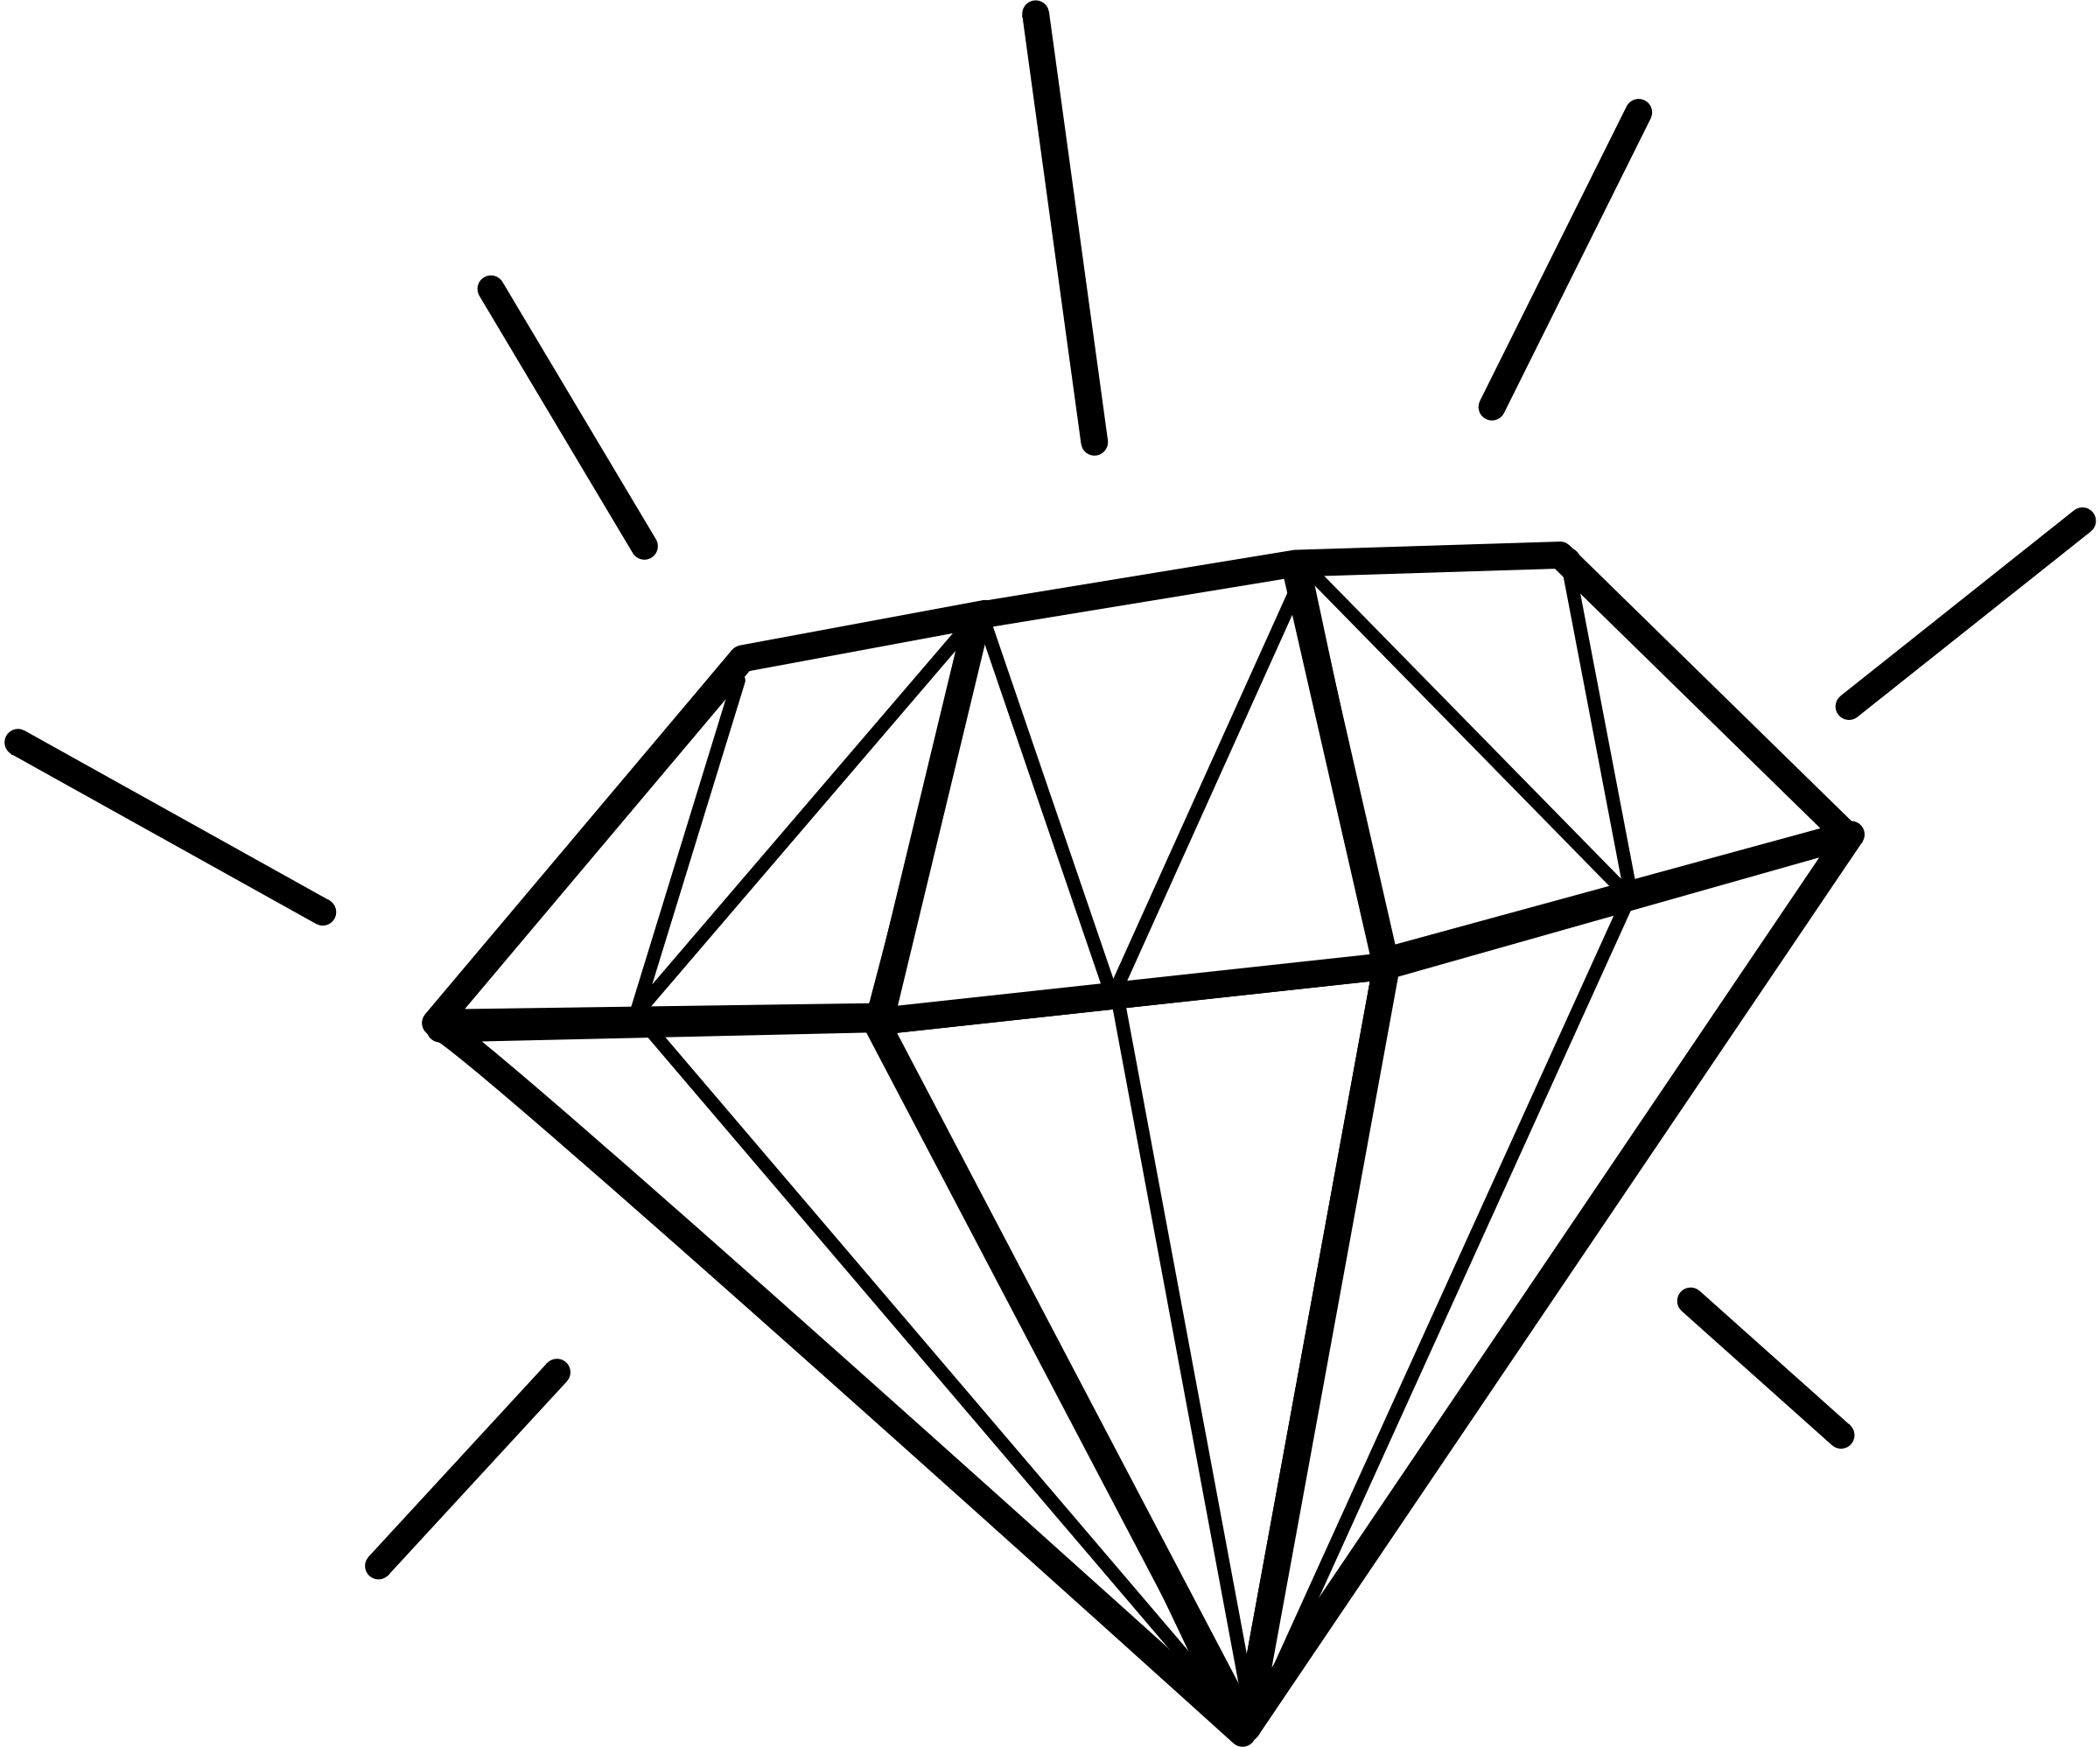 Diamond Clip Art - Diamonds Clipart